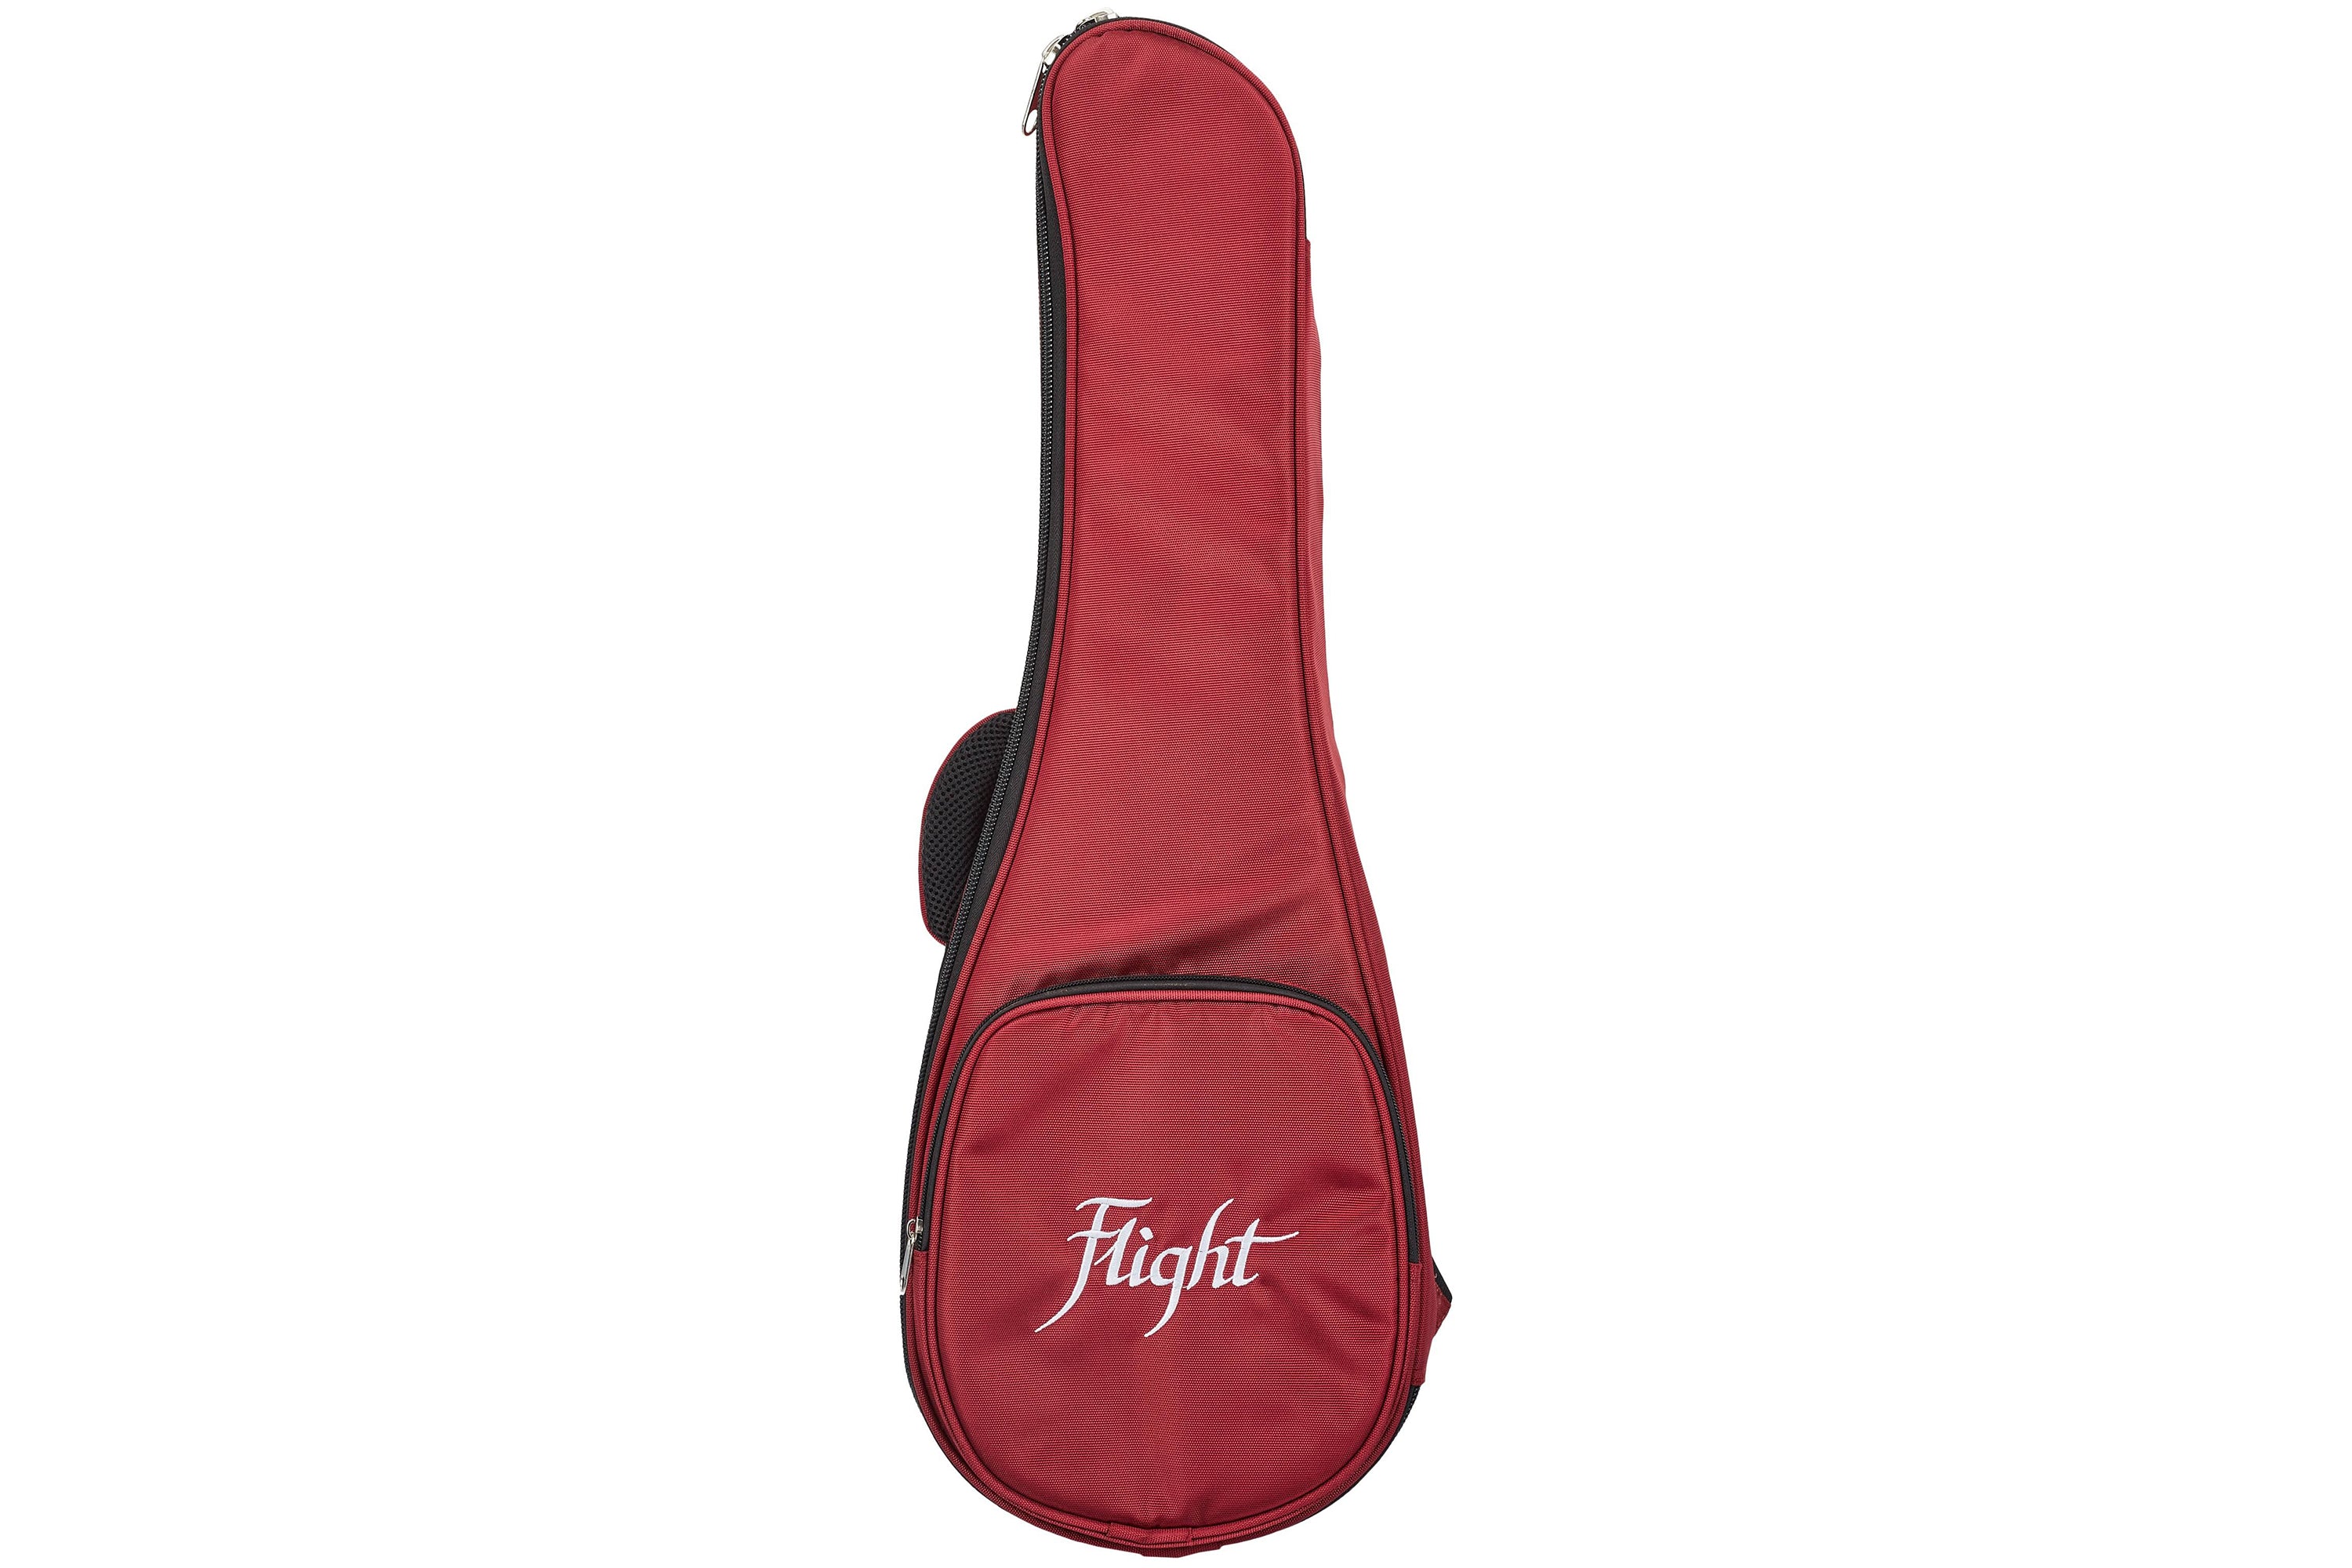 [BAG BLOWOUT] Flight Premium Padded Gigbag - CONCERT - RED